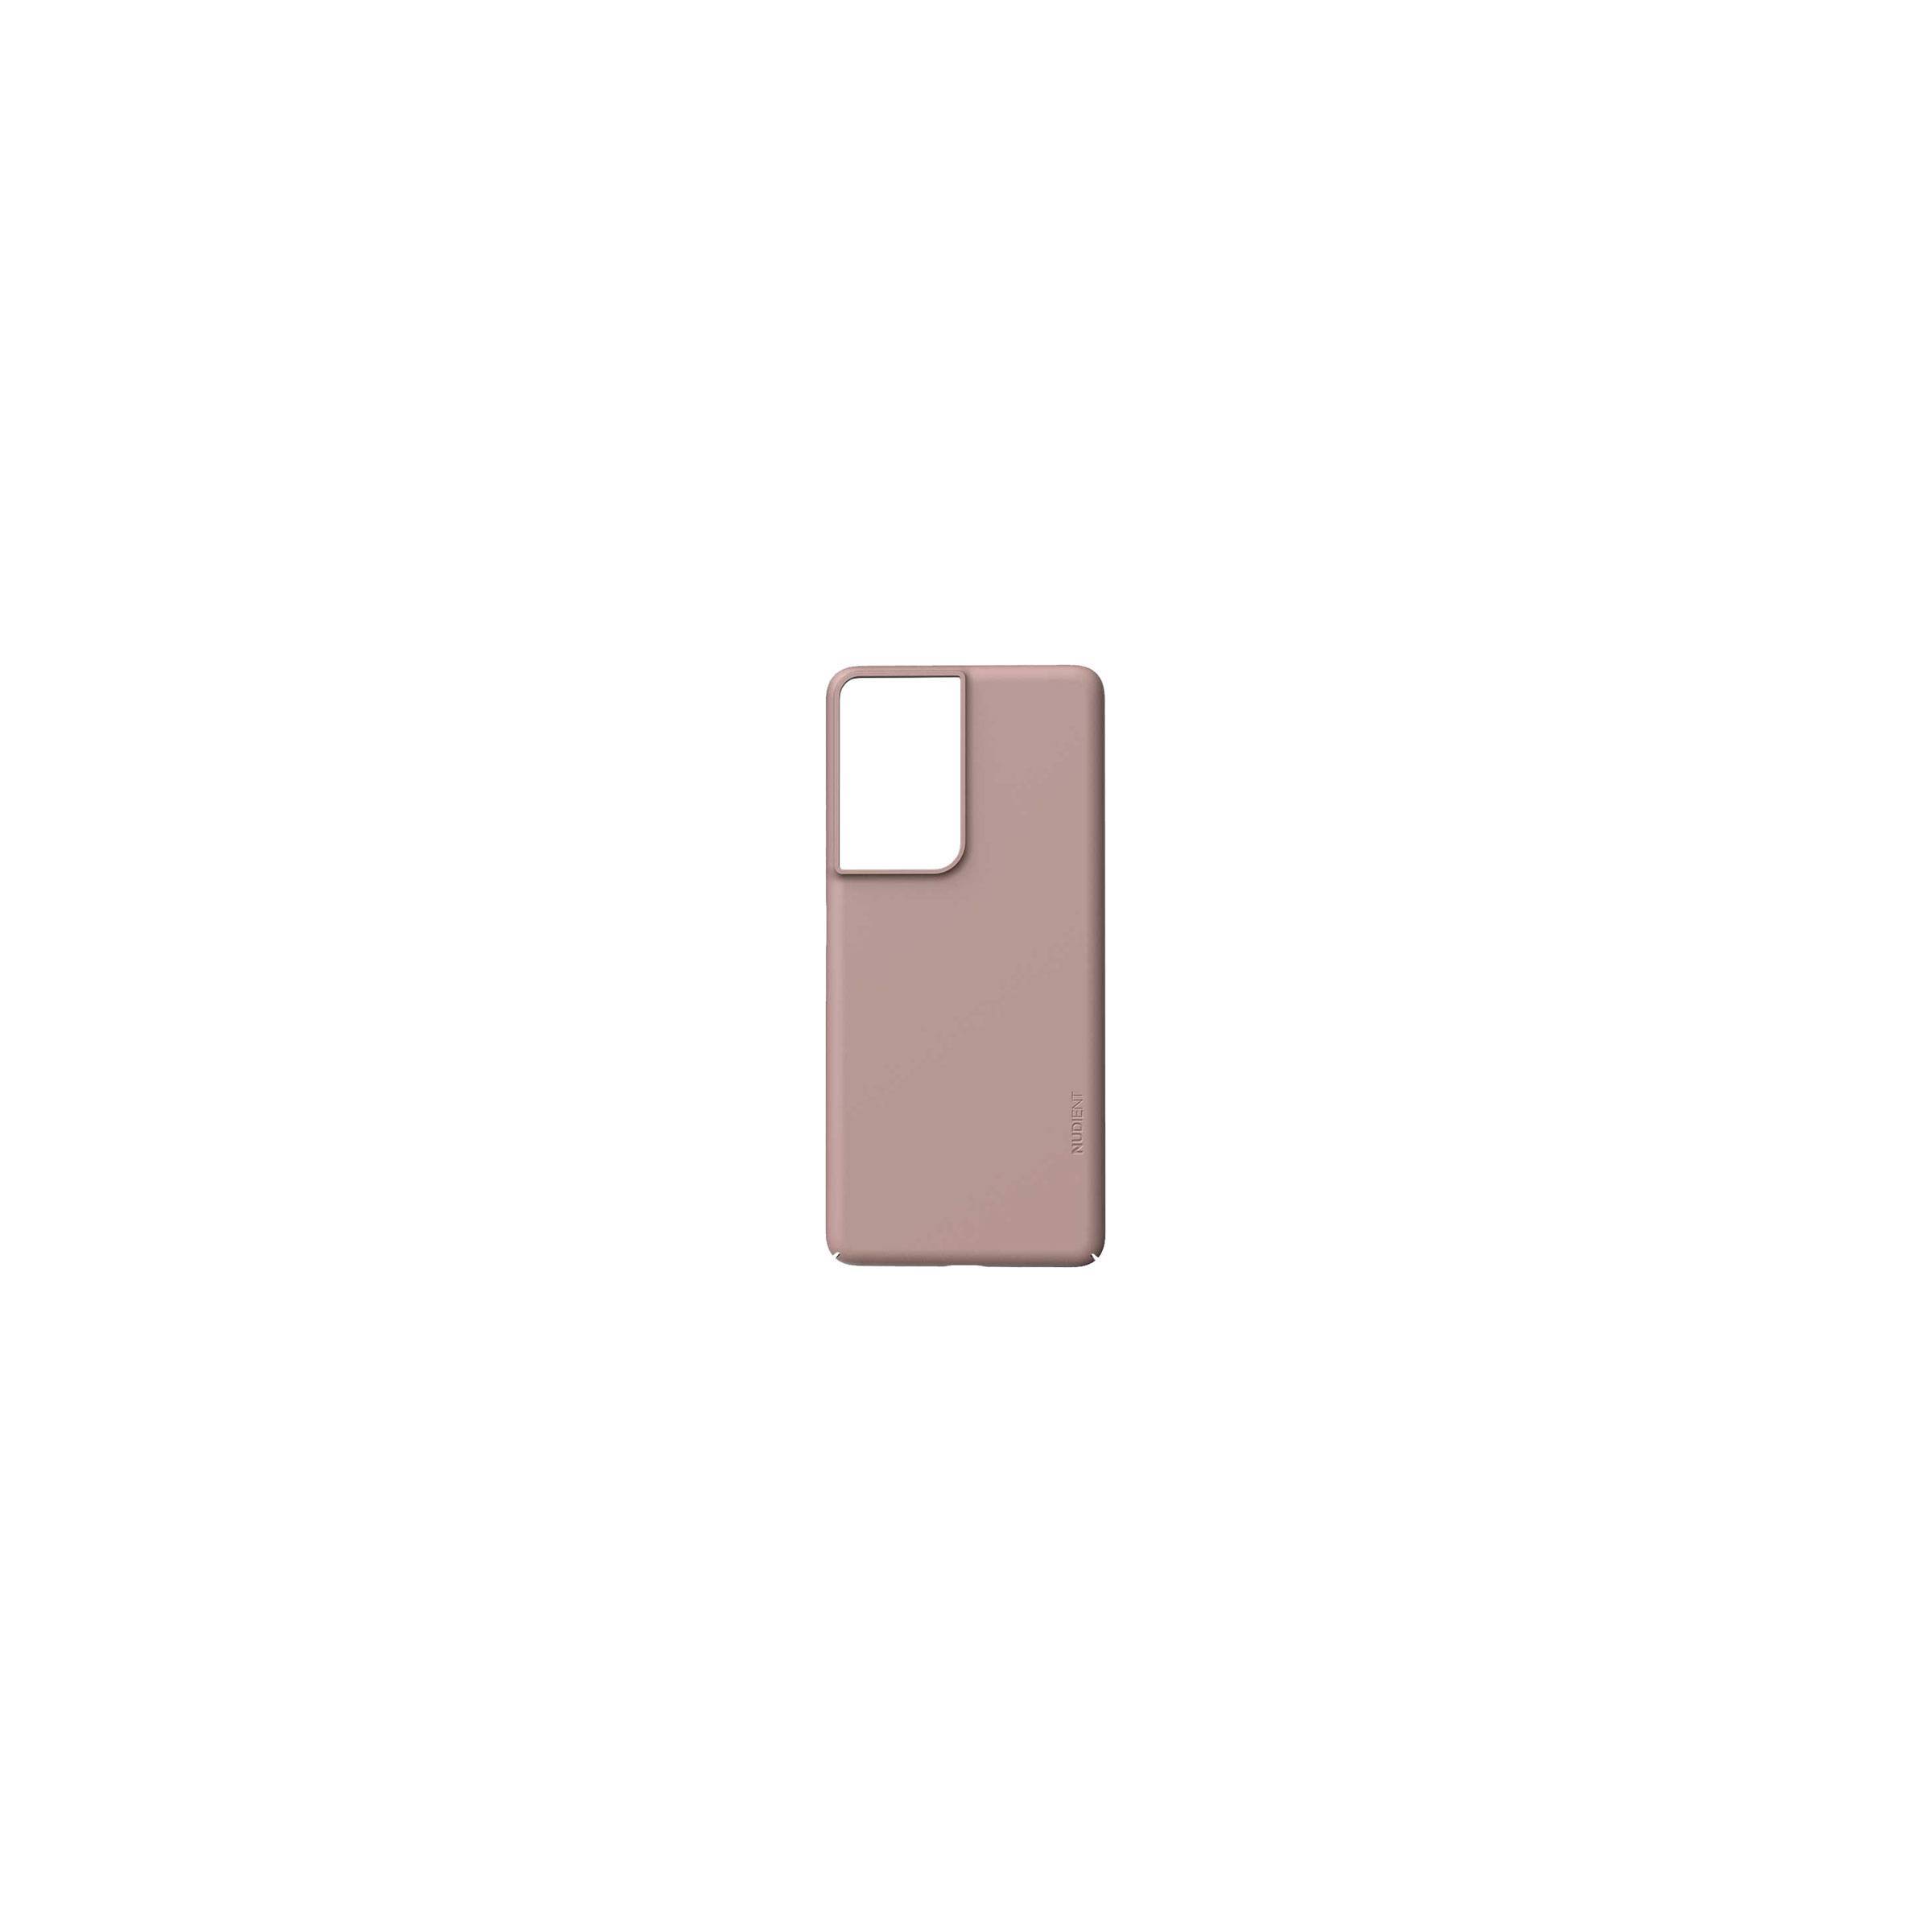 Bilde av Nudient Thin Precise V3 Samsung Galaxy S21 Ultra Cover, Dusty Pink